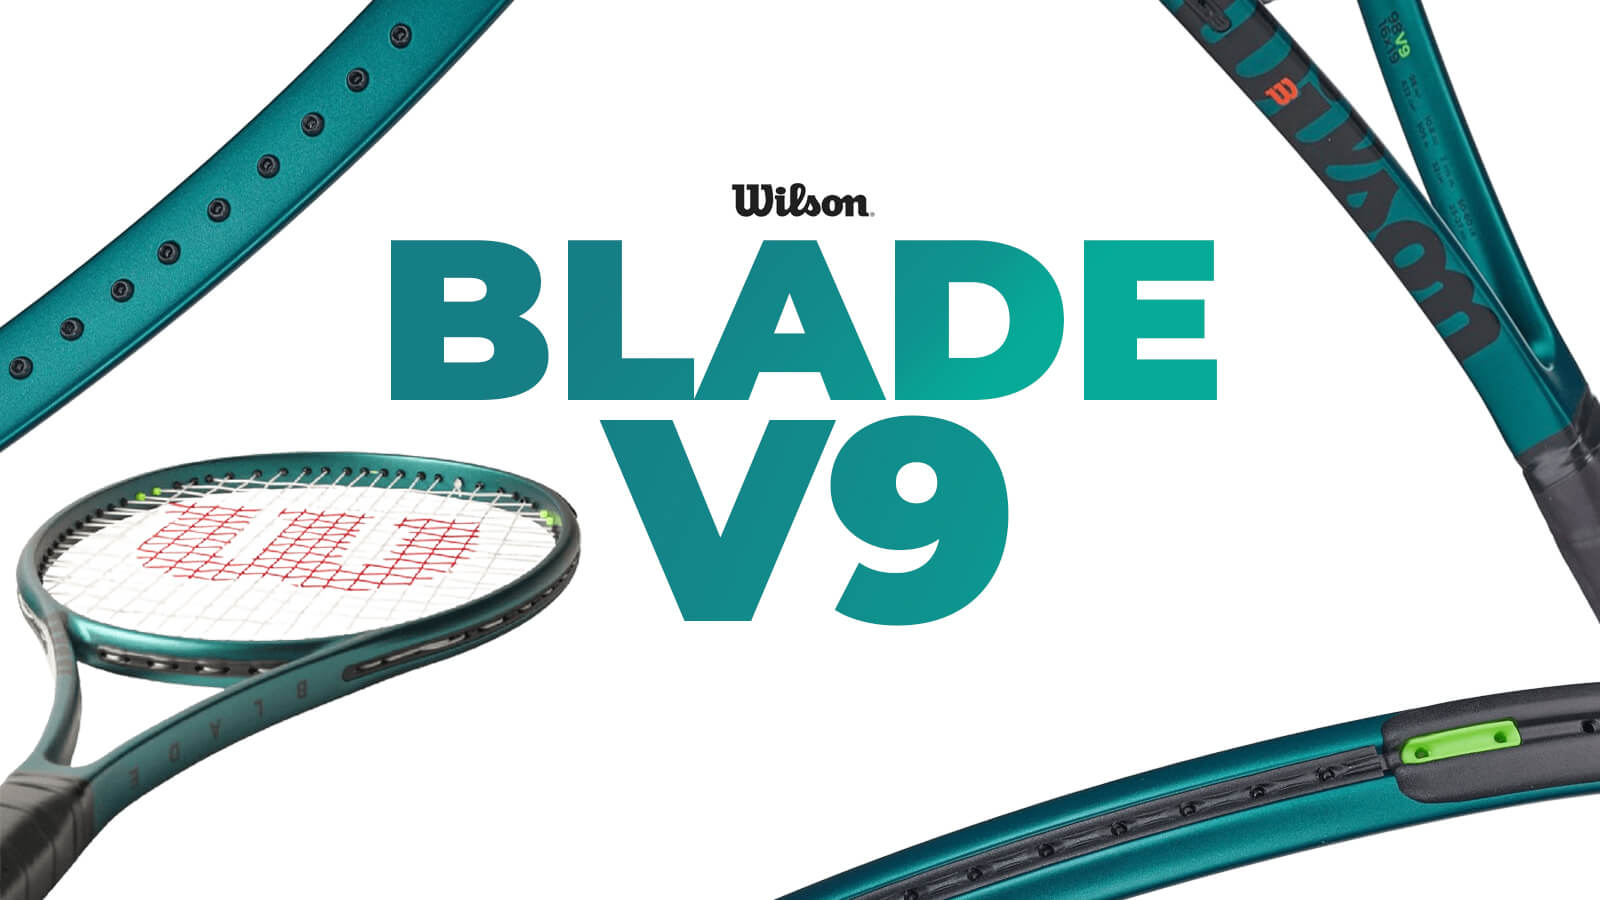 Wilson Creates 'Sharper' Blade Racket With V9 Release